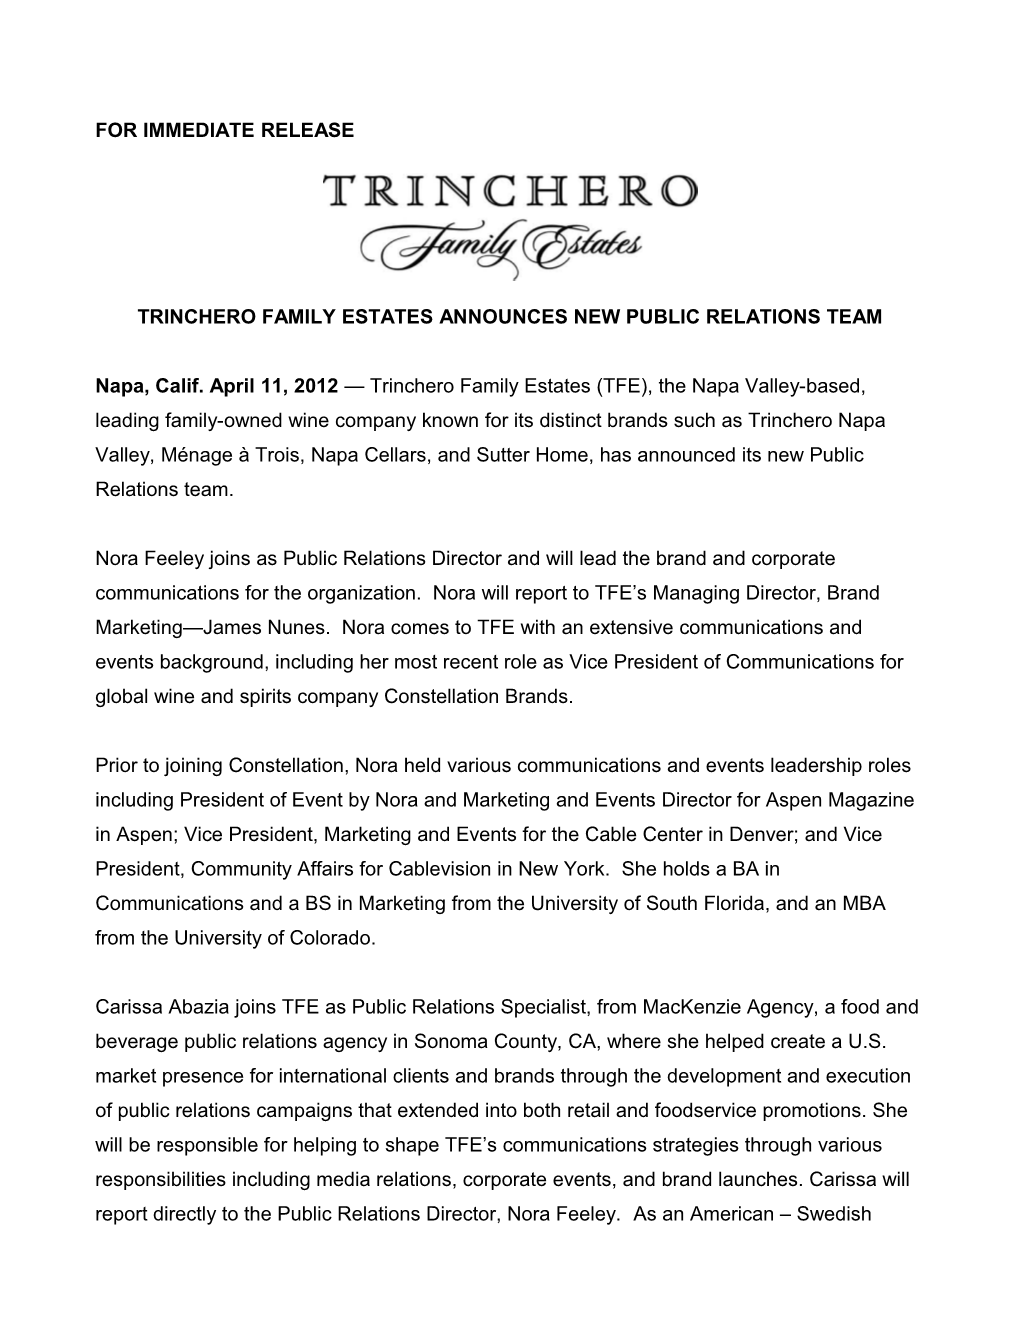 Trinchero Family Estates and Joel Gott Wines Announce Joint Venture